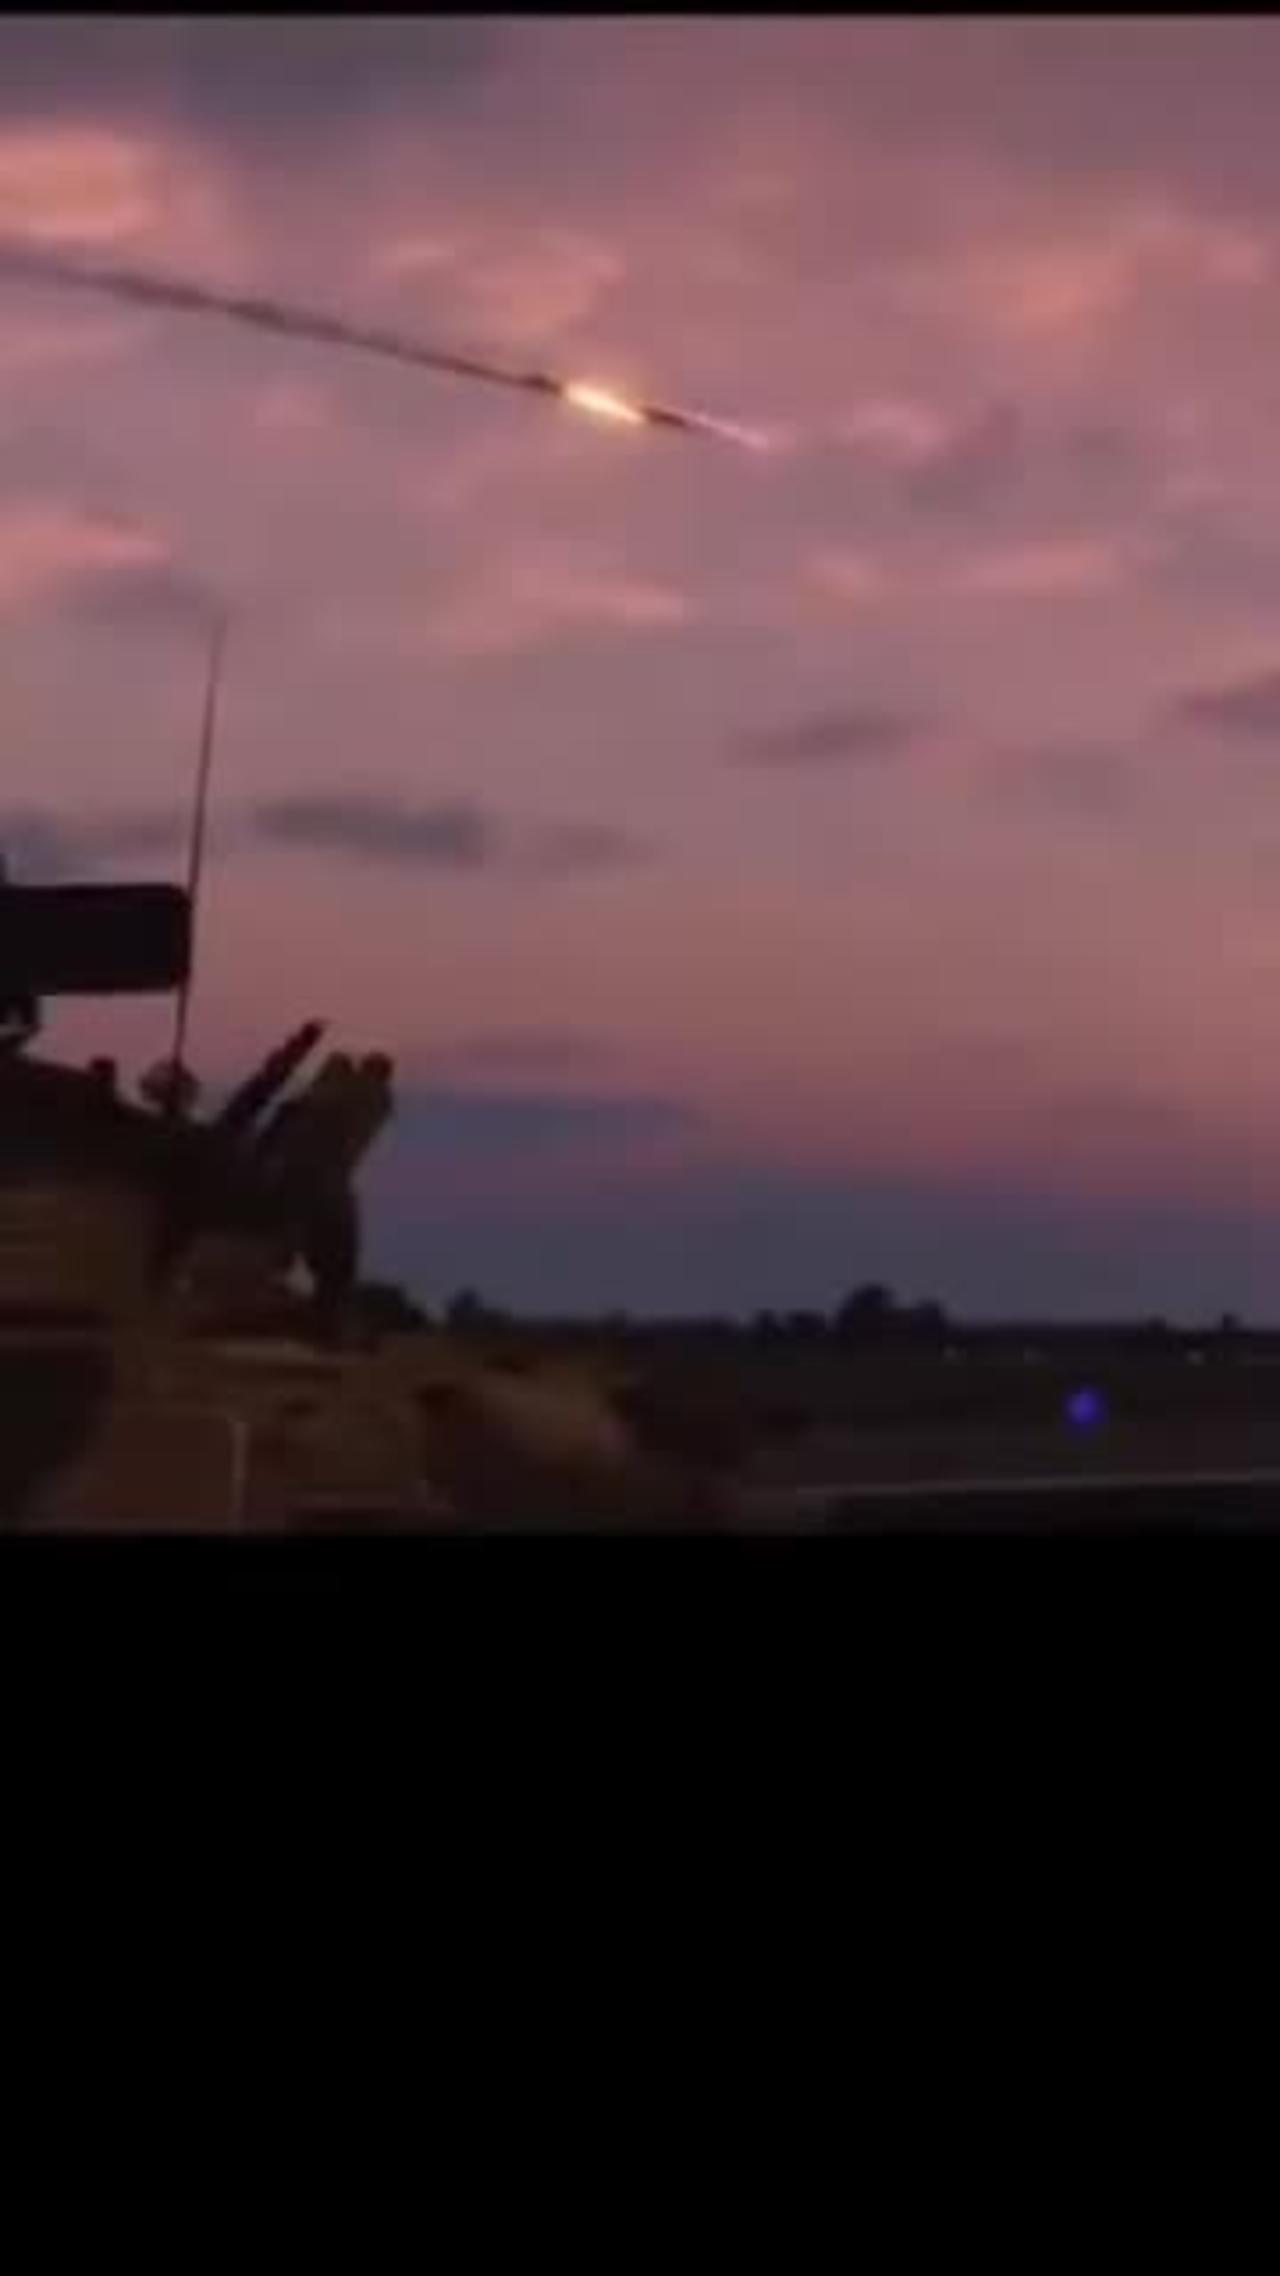 Ukraine war, footage shows Ukraine new air defense system shooting down Russia fighter jet#